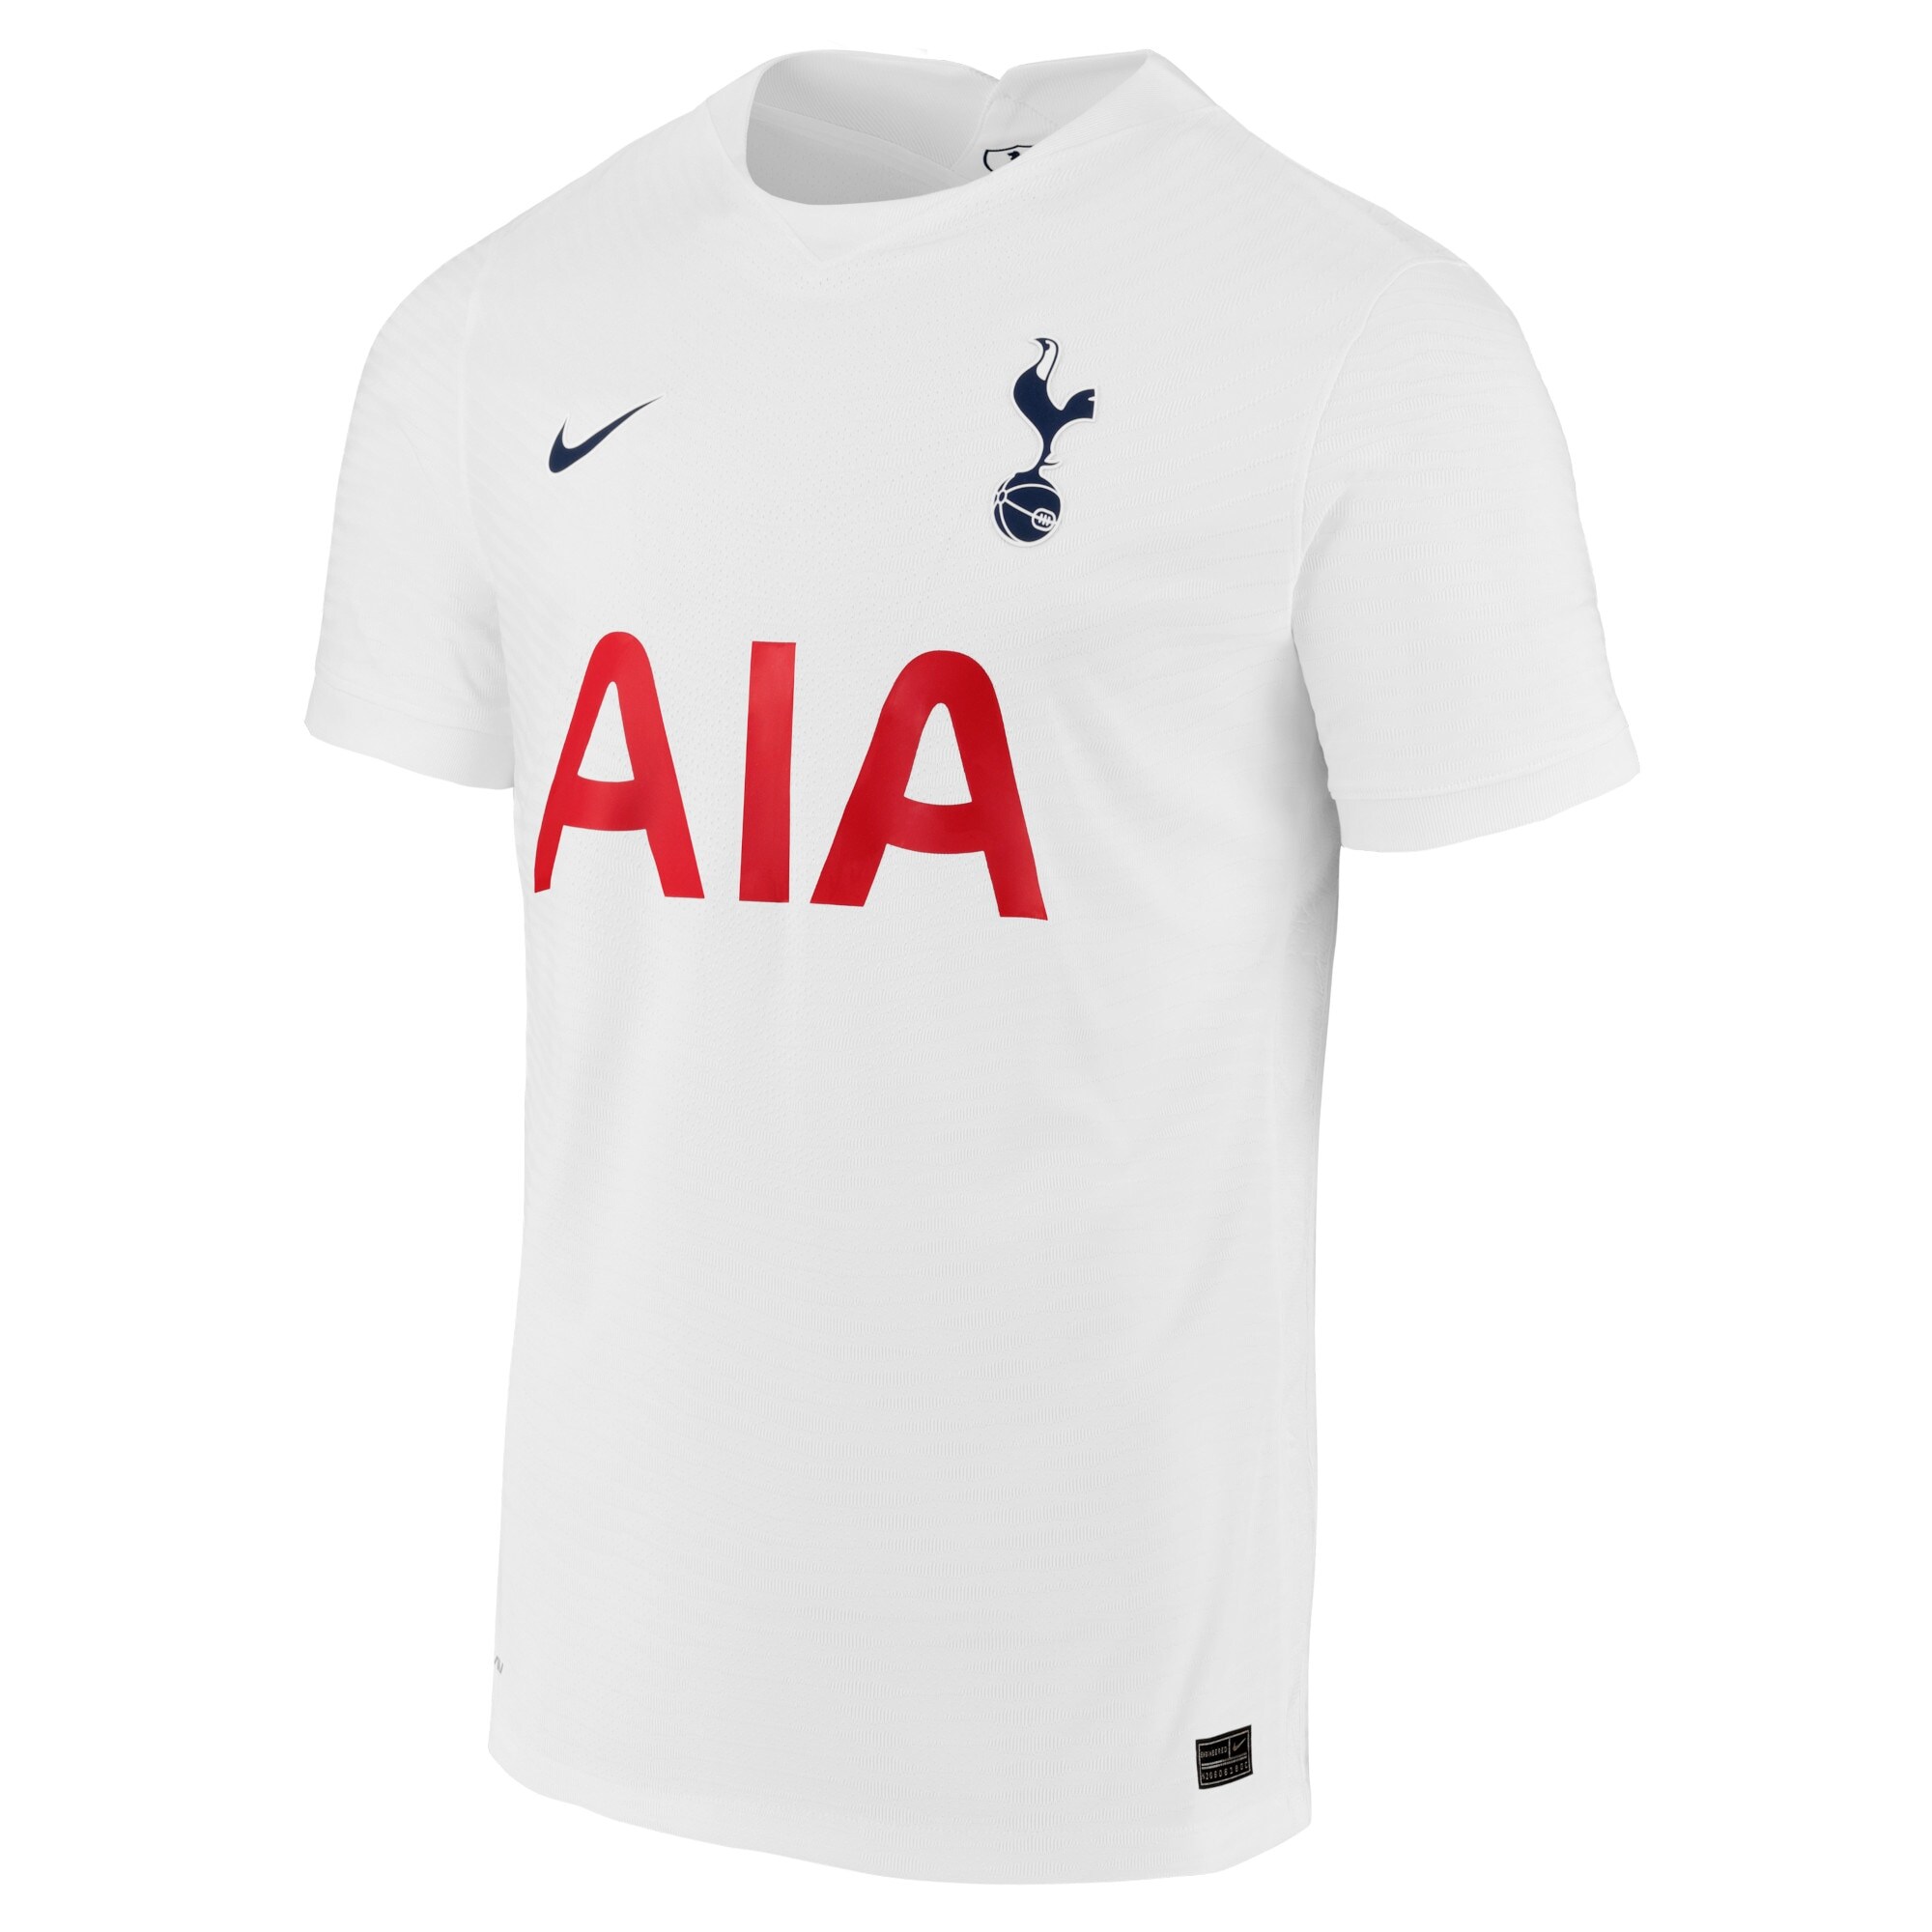 Tottenham Hotspur Home Vapor Match Shirt 2021-22 with Lucas 27 printing